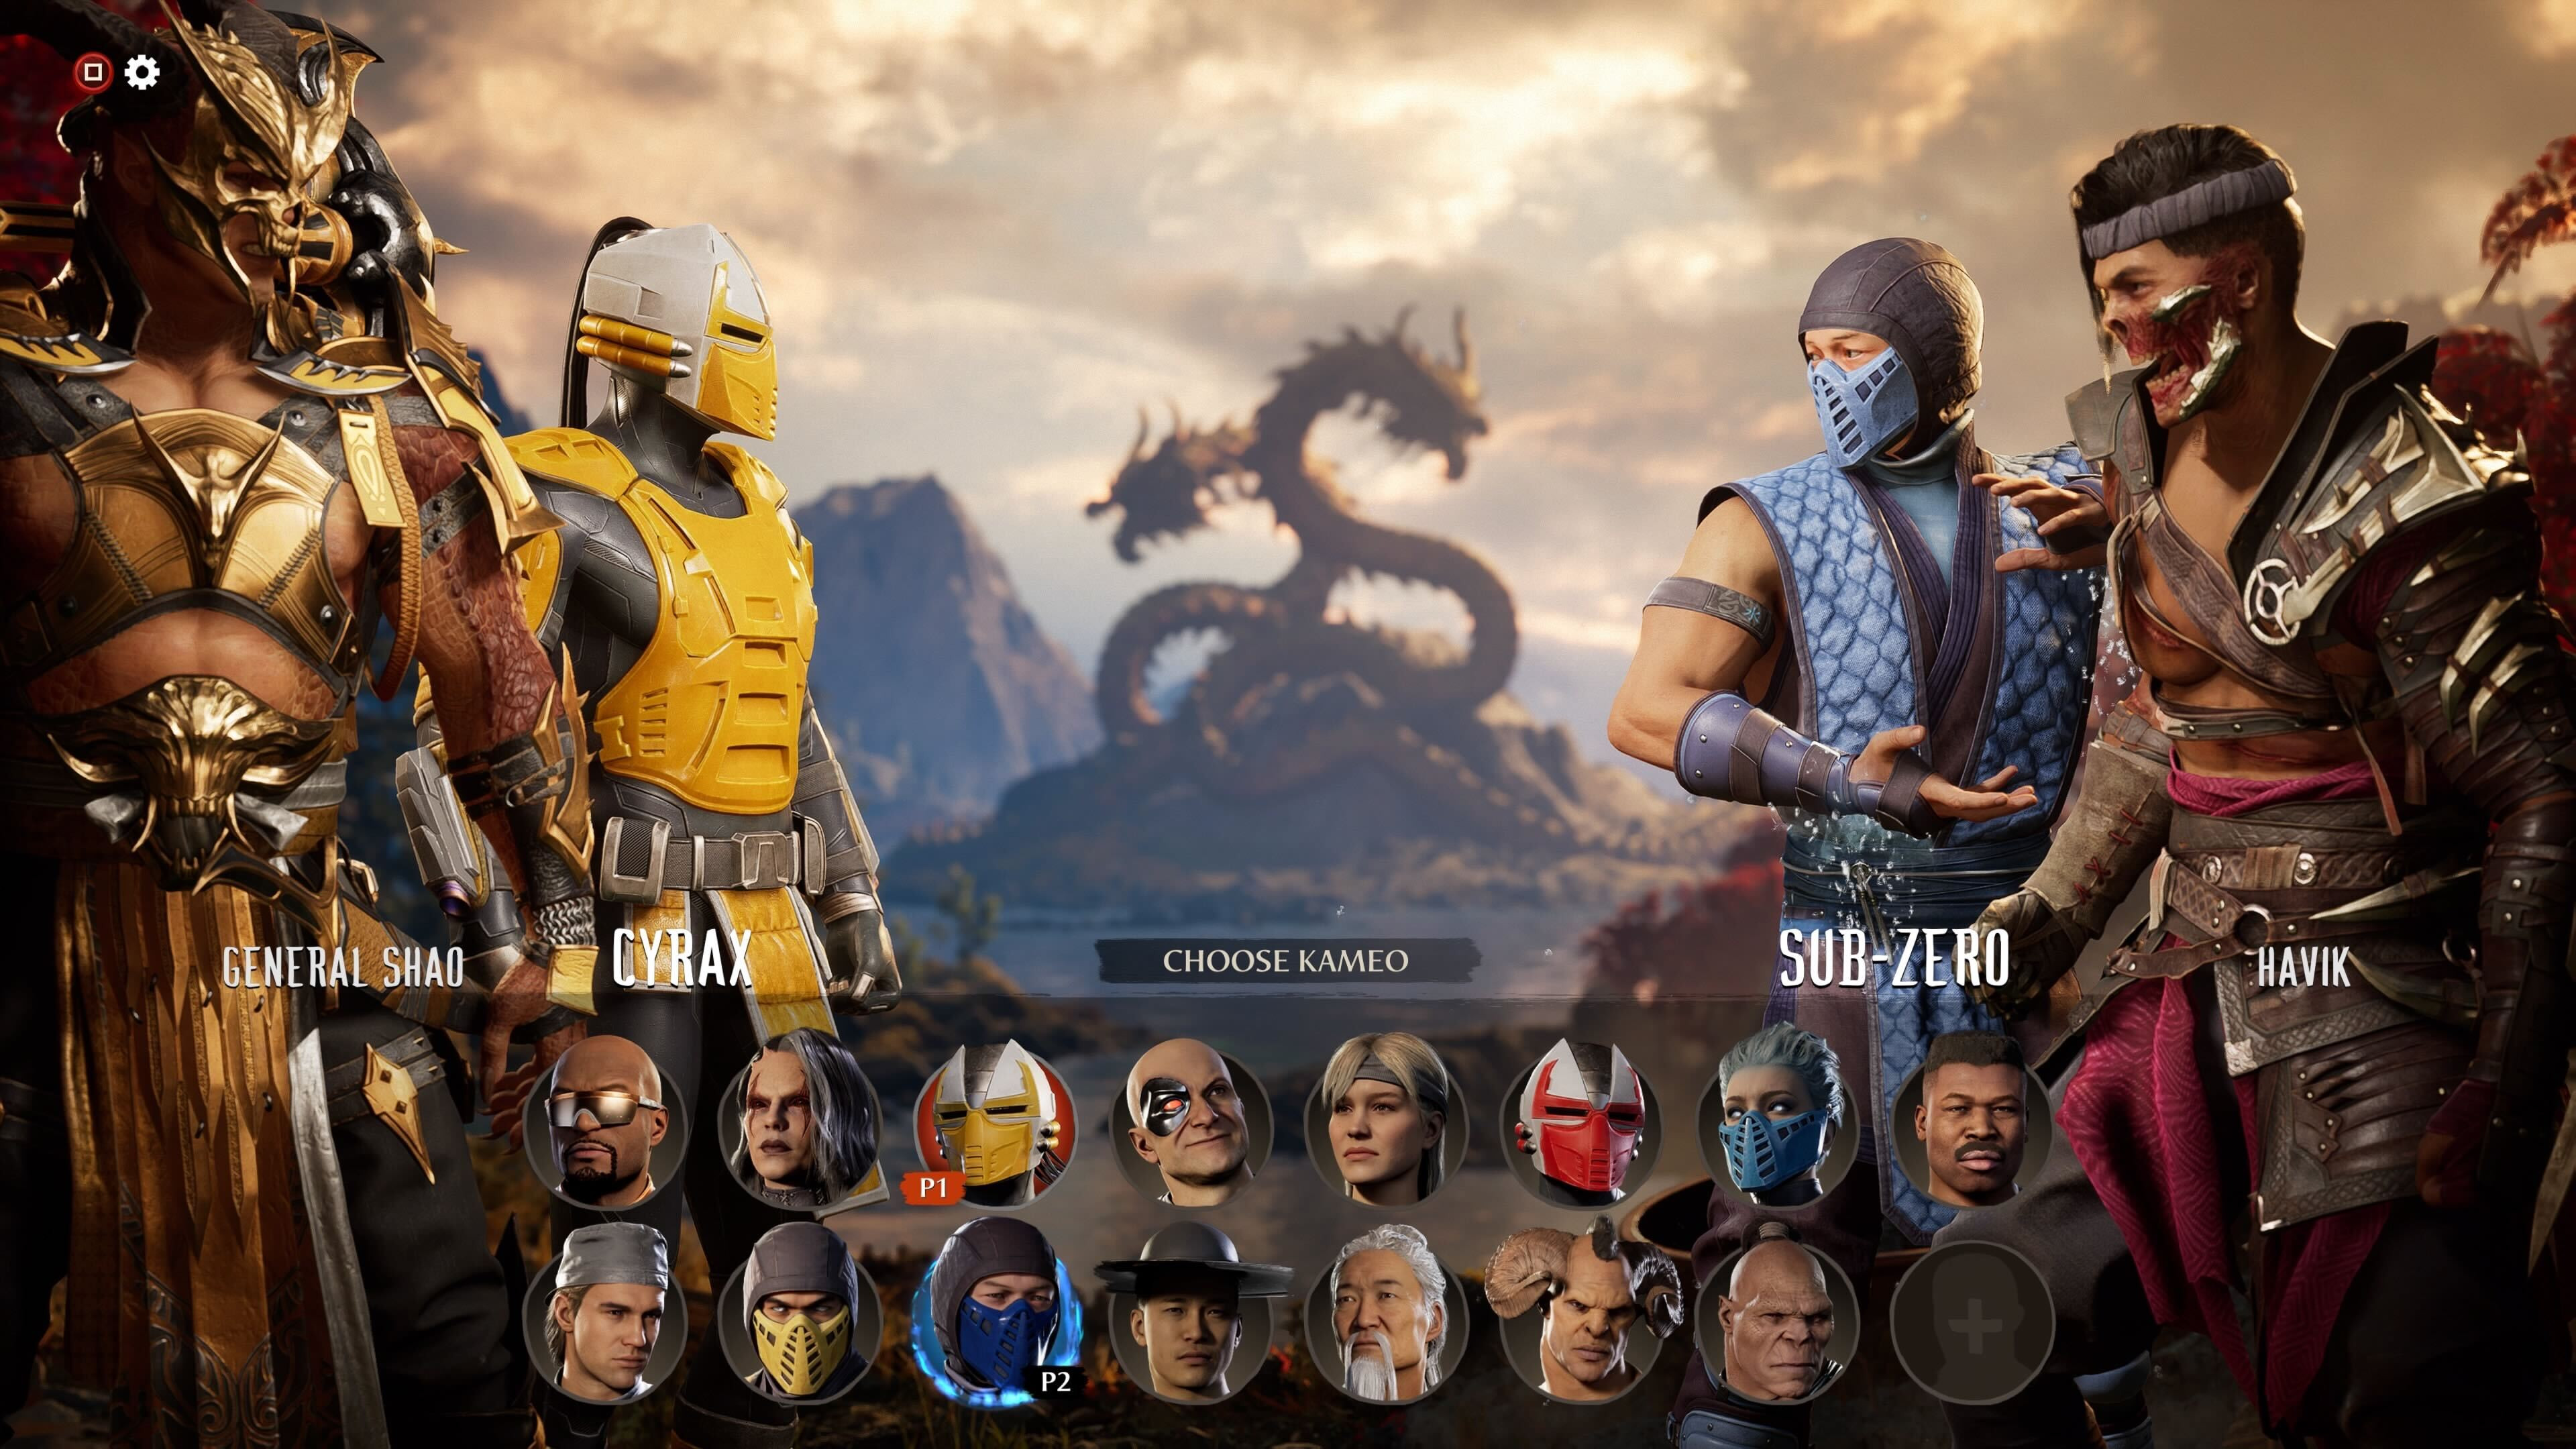 Mortal Kombat 4 - Special Moves and Finishers Guide - Mortal Kombat Secrets